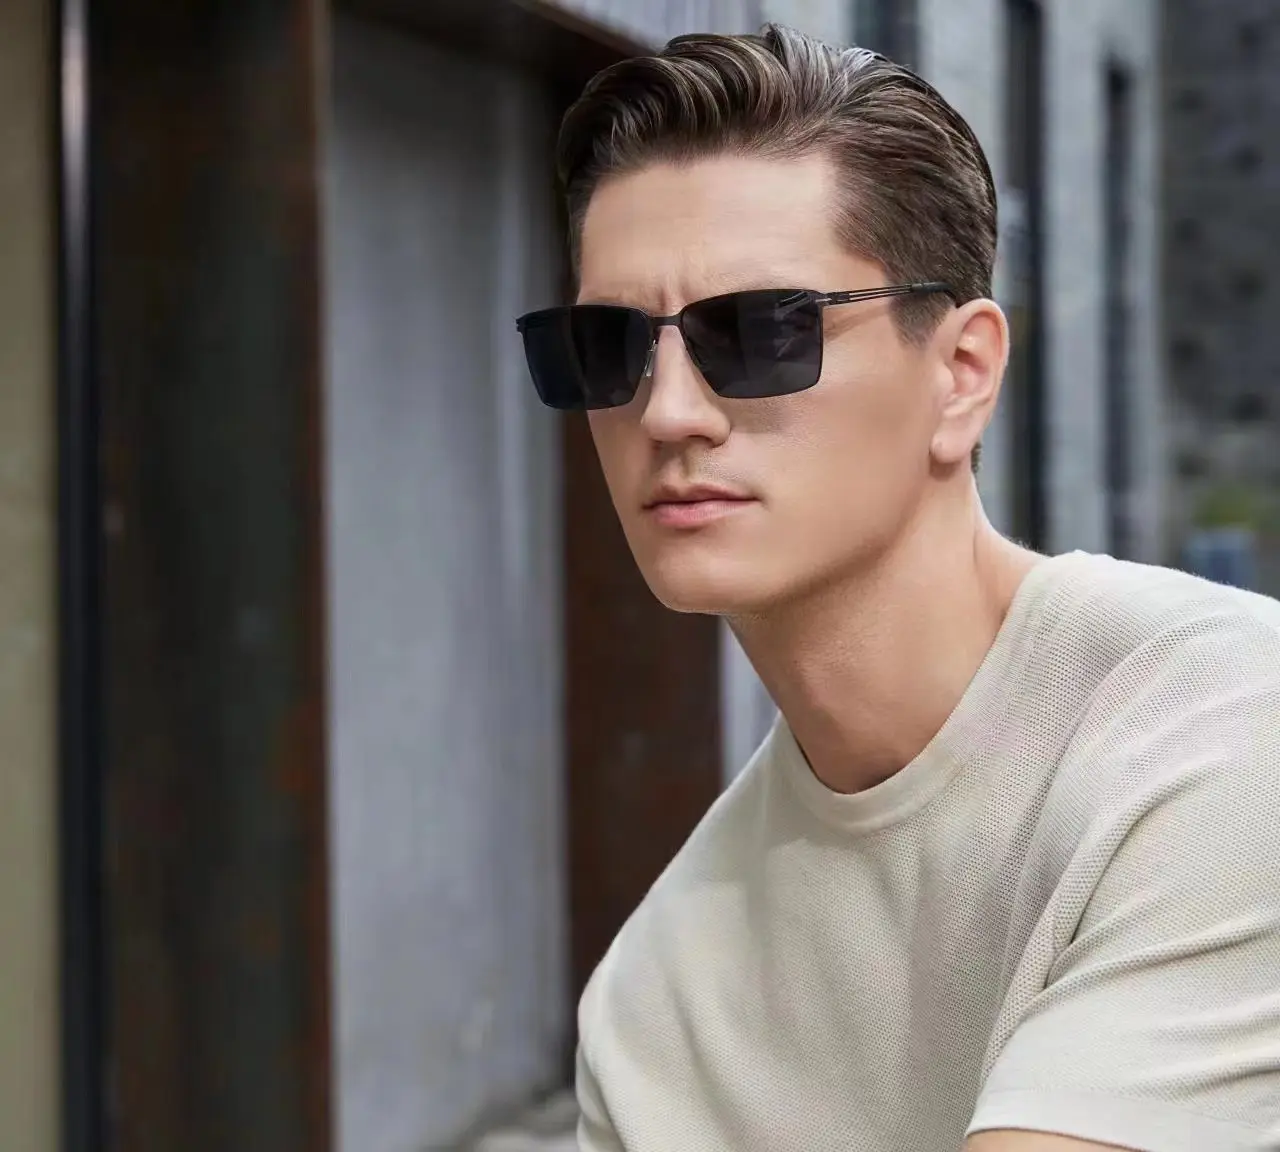 FANXUN 7065 Men's Fashion Nylon Polarized Sunglasses with UV Protection Screw Free Stainless Steel Frame Sunglasses